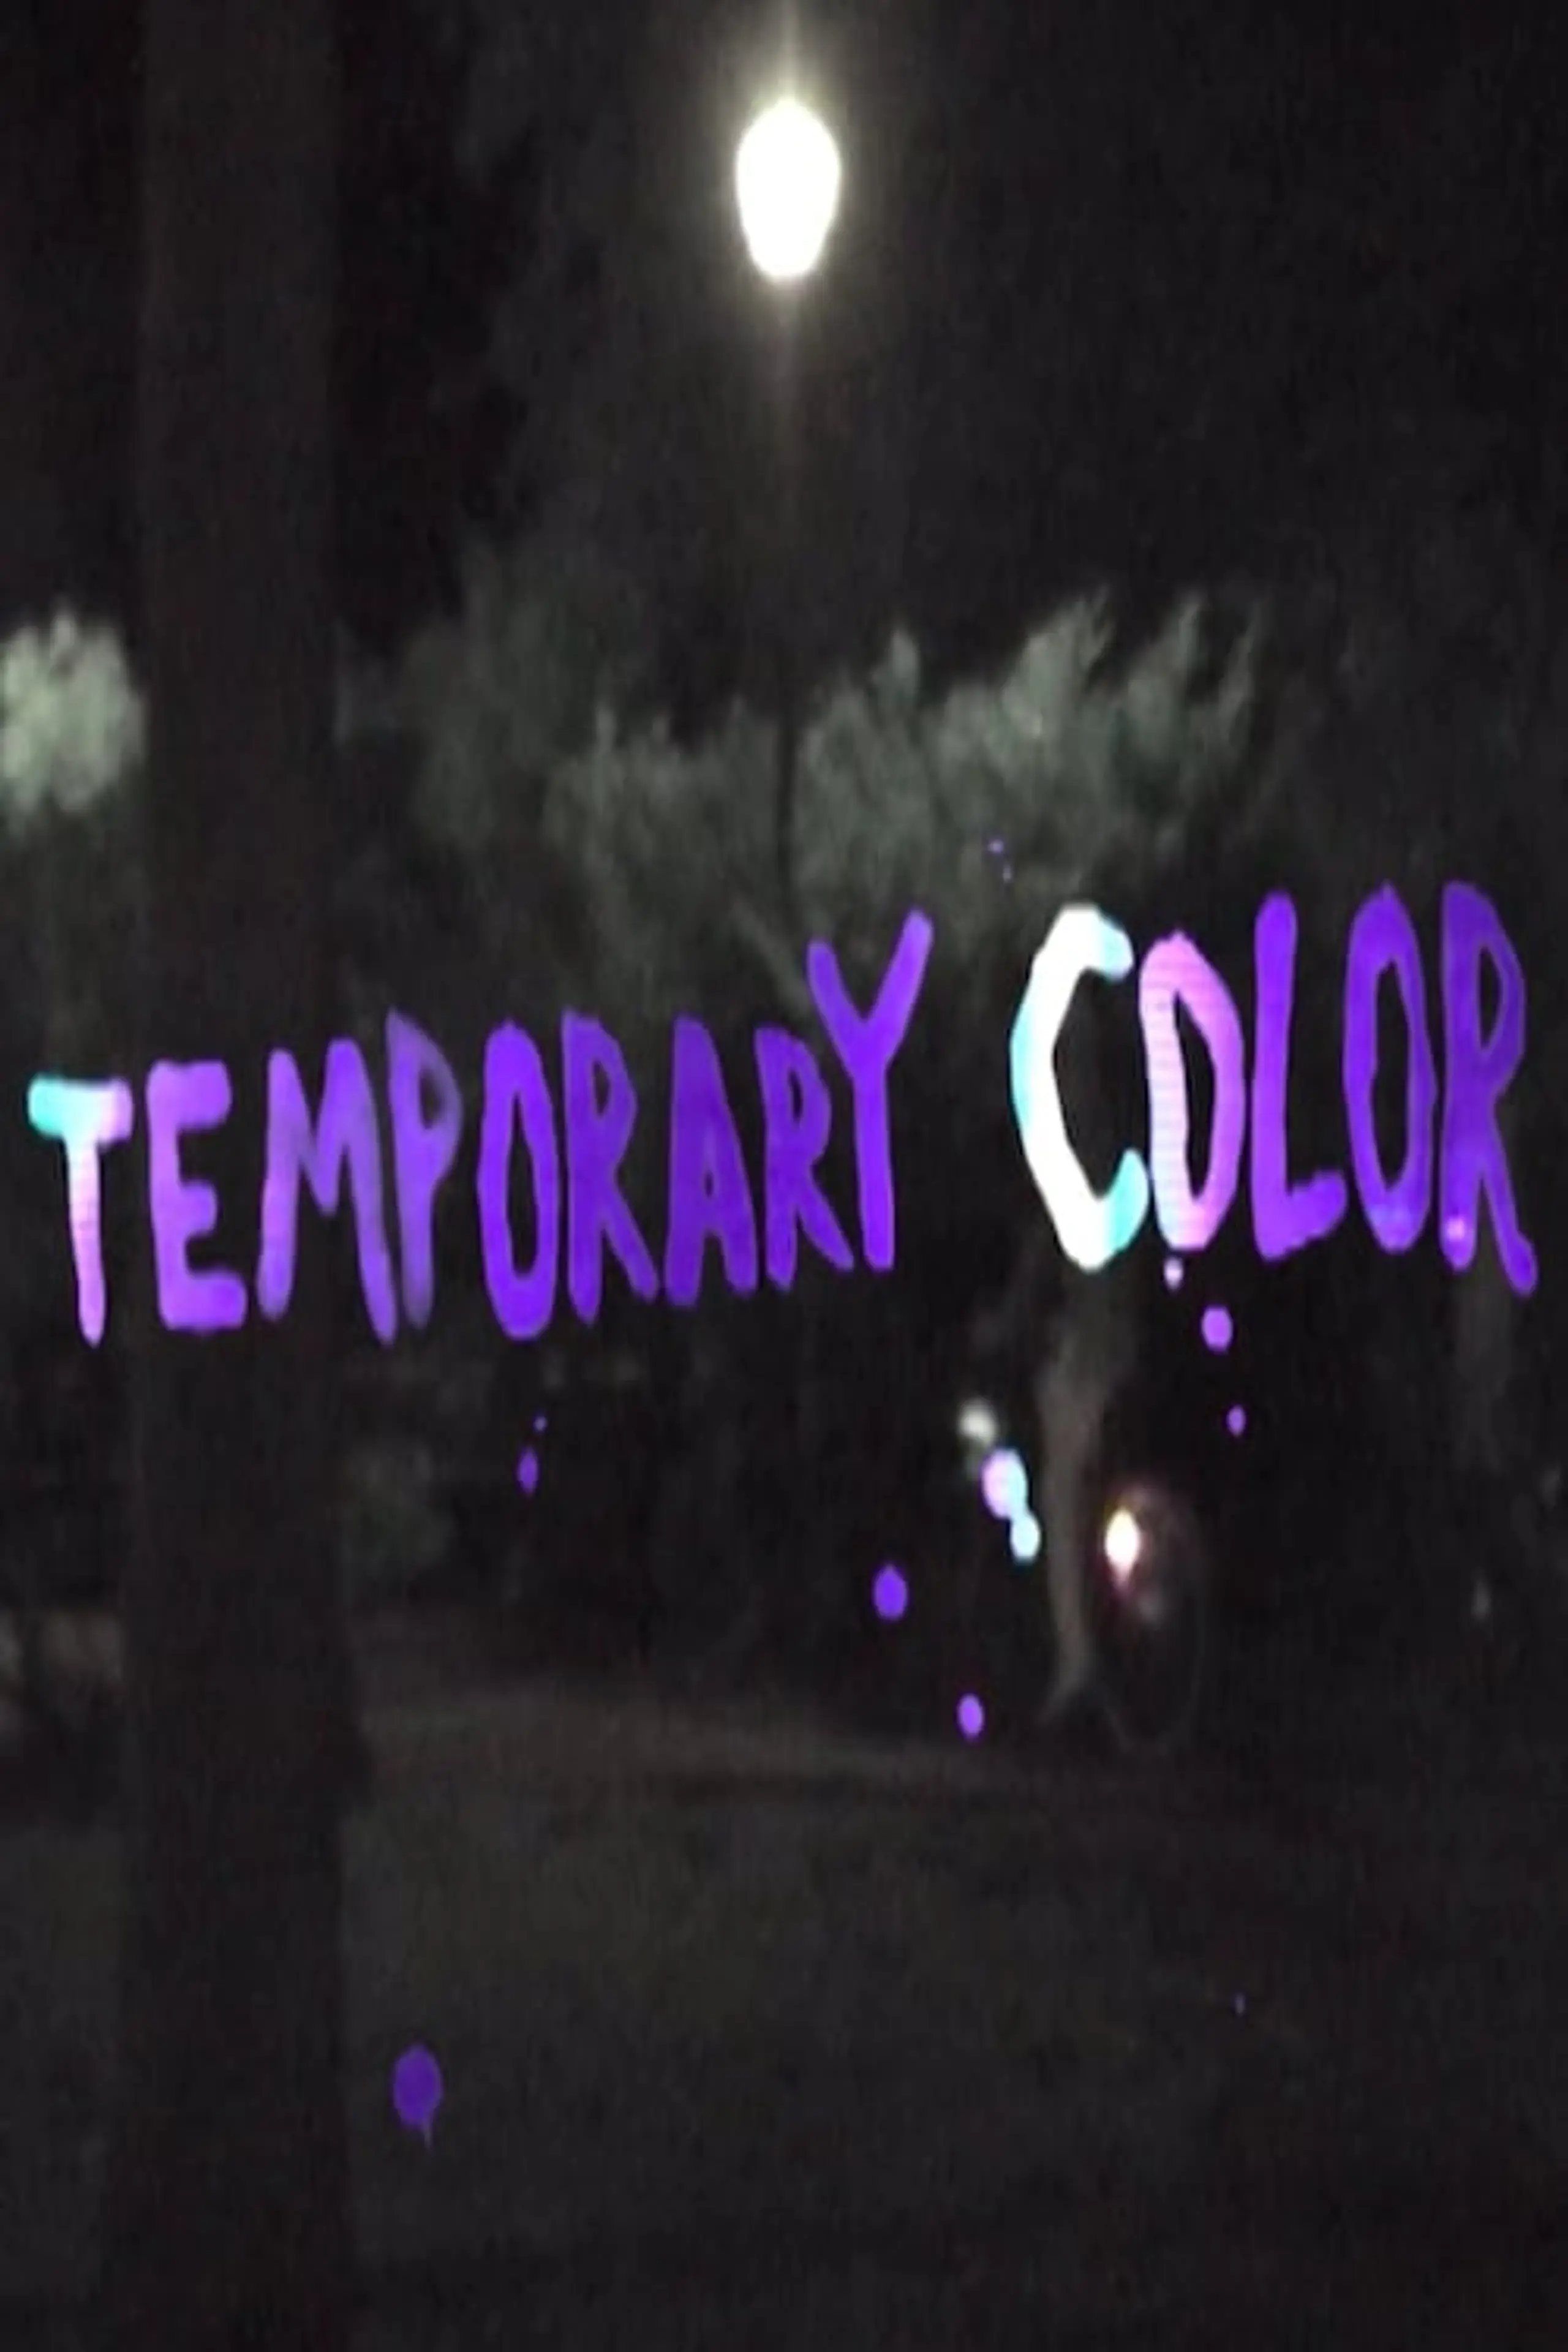 Temporary Color